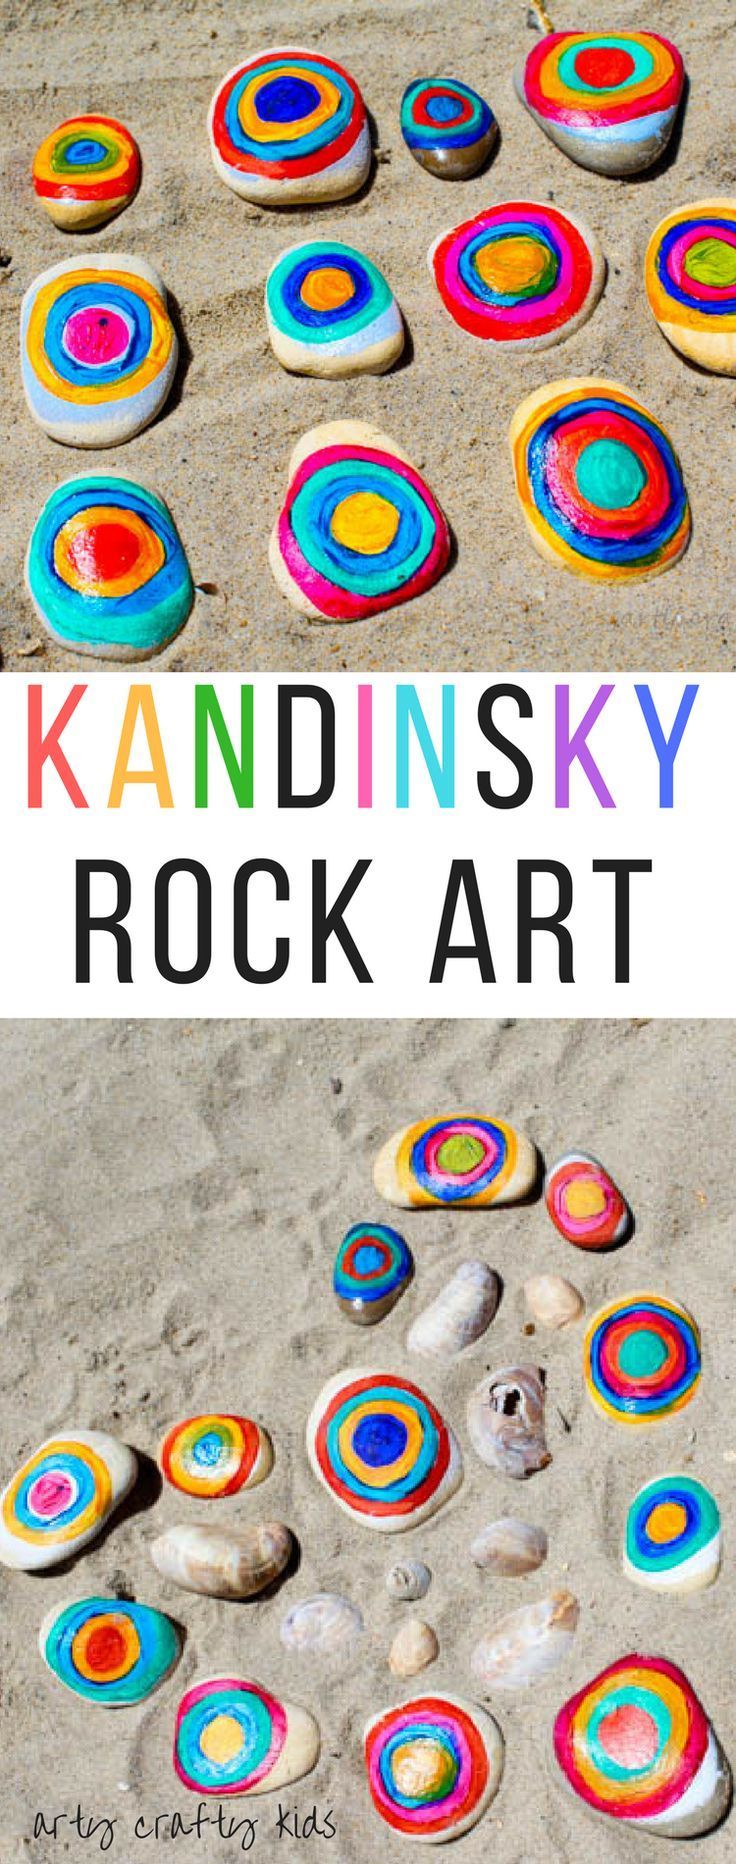 Arty Crafty Kids | Art | Kandinsky Inspired Rock Art | A fun interpretation of Kandinsky’s famous conecentric circles. A great way